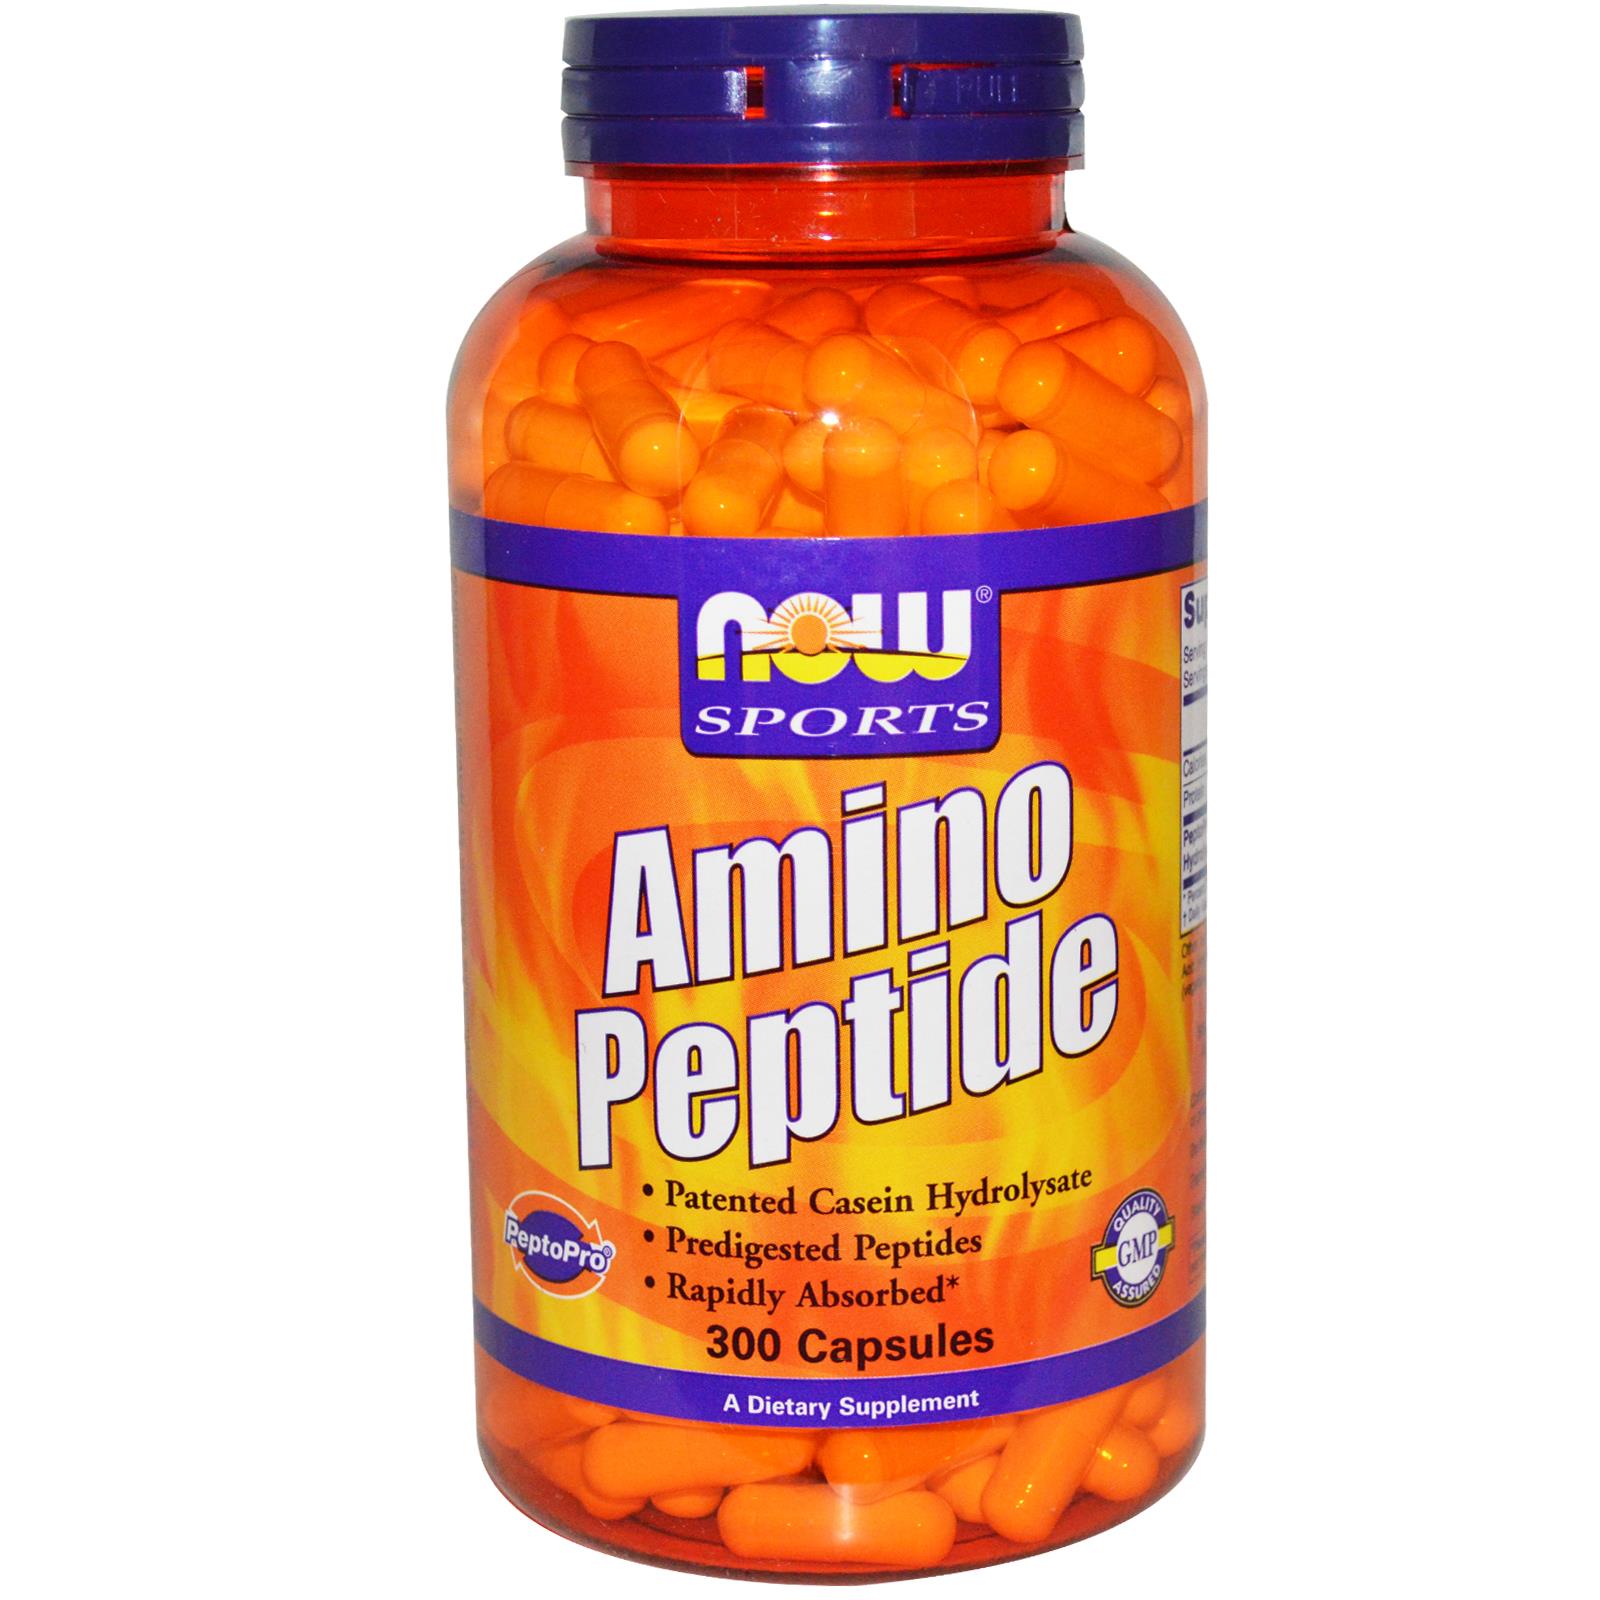 NOW Amino Peptide